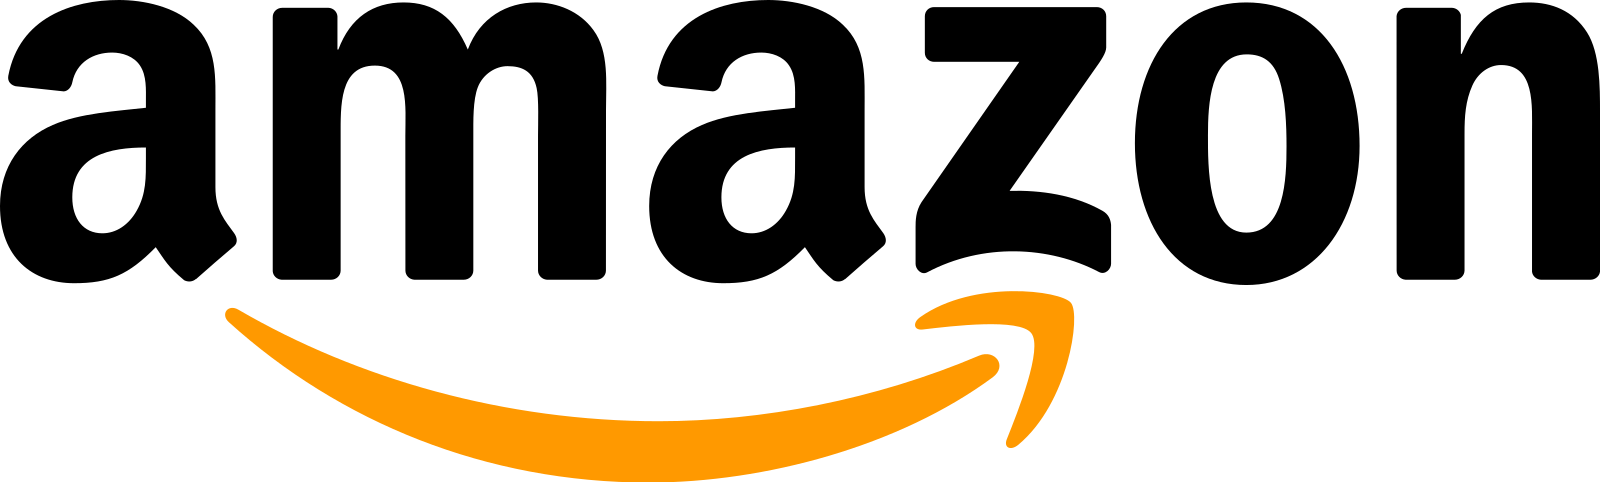 1600px-Amazon_logo.svg